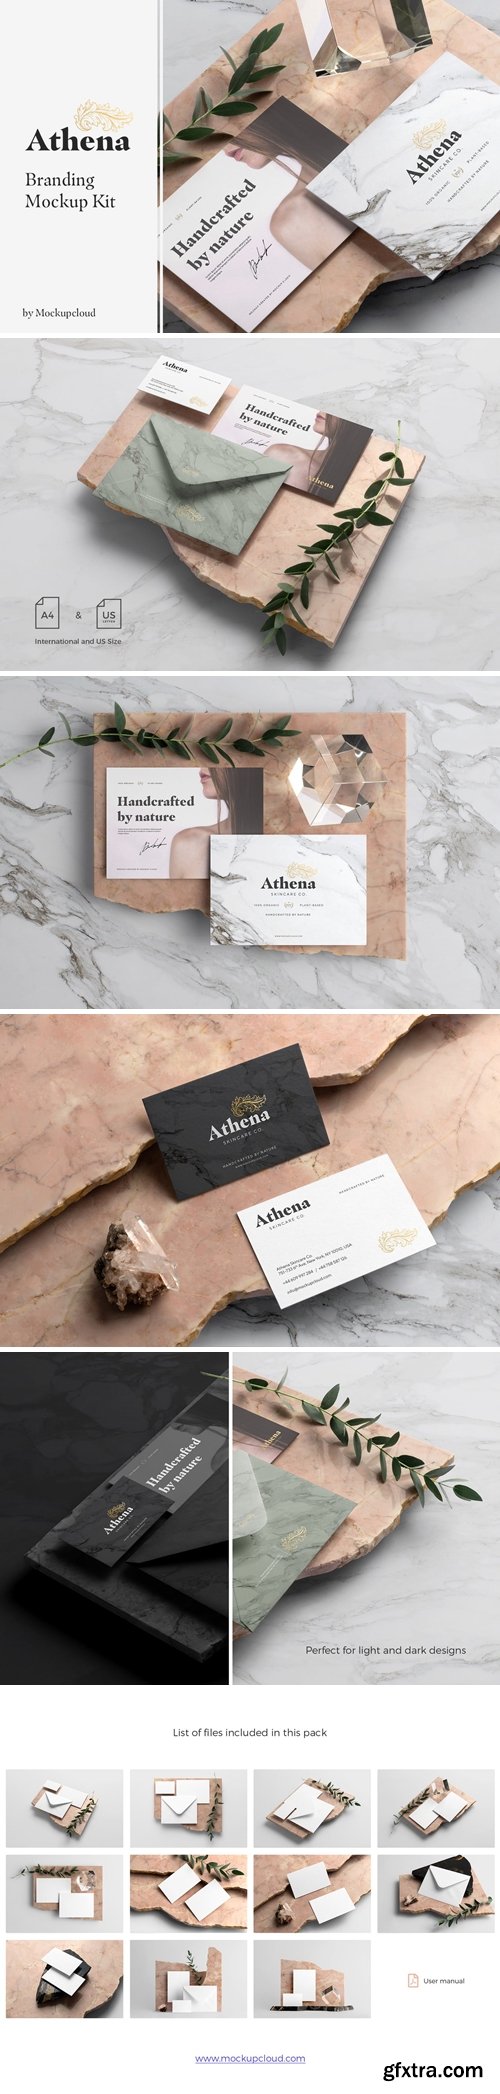 Athena Branding Mockup